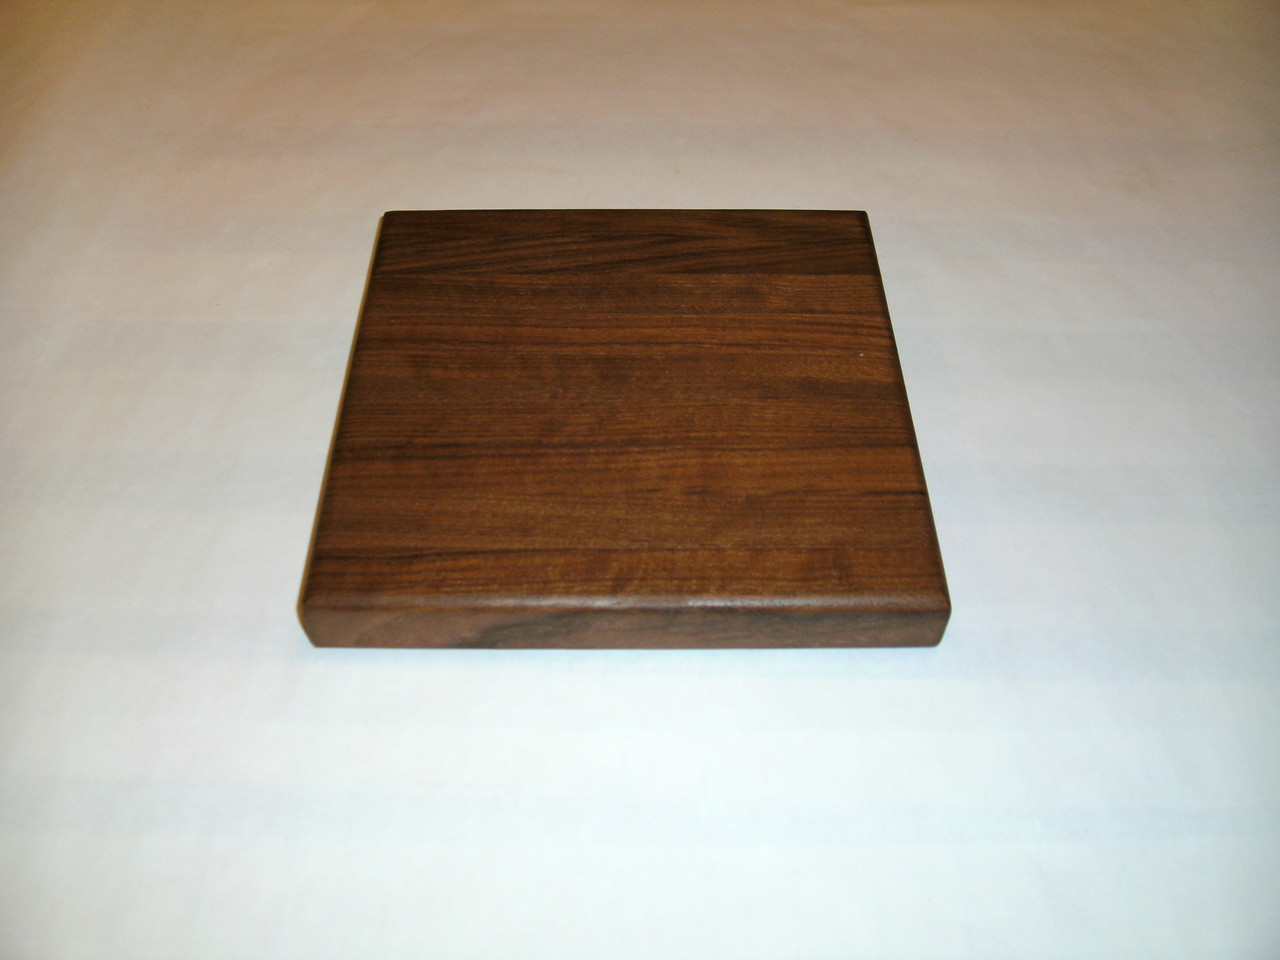 Standard Plain Cutting Board (9 inches) - Made in USA